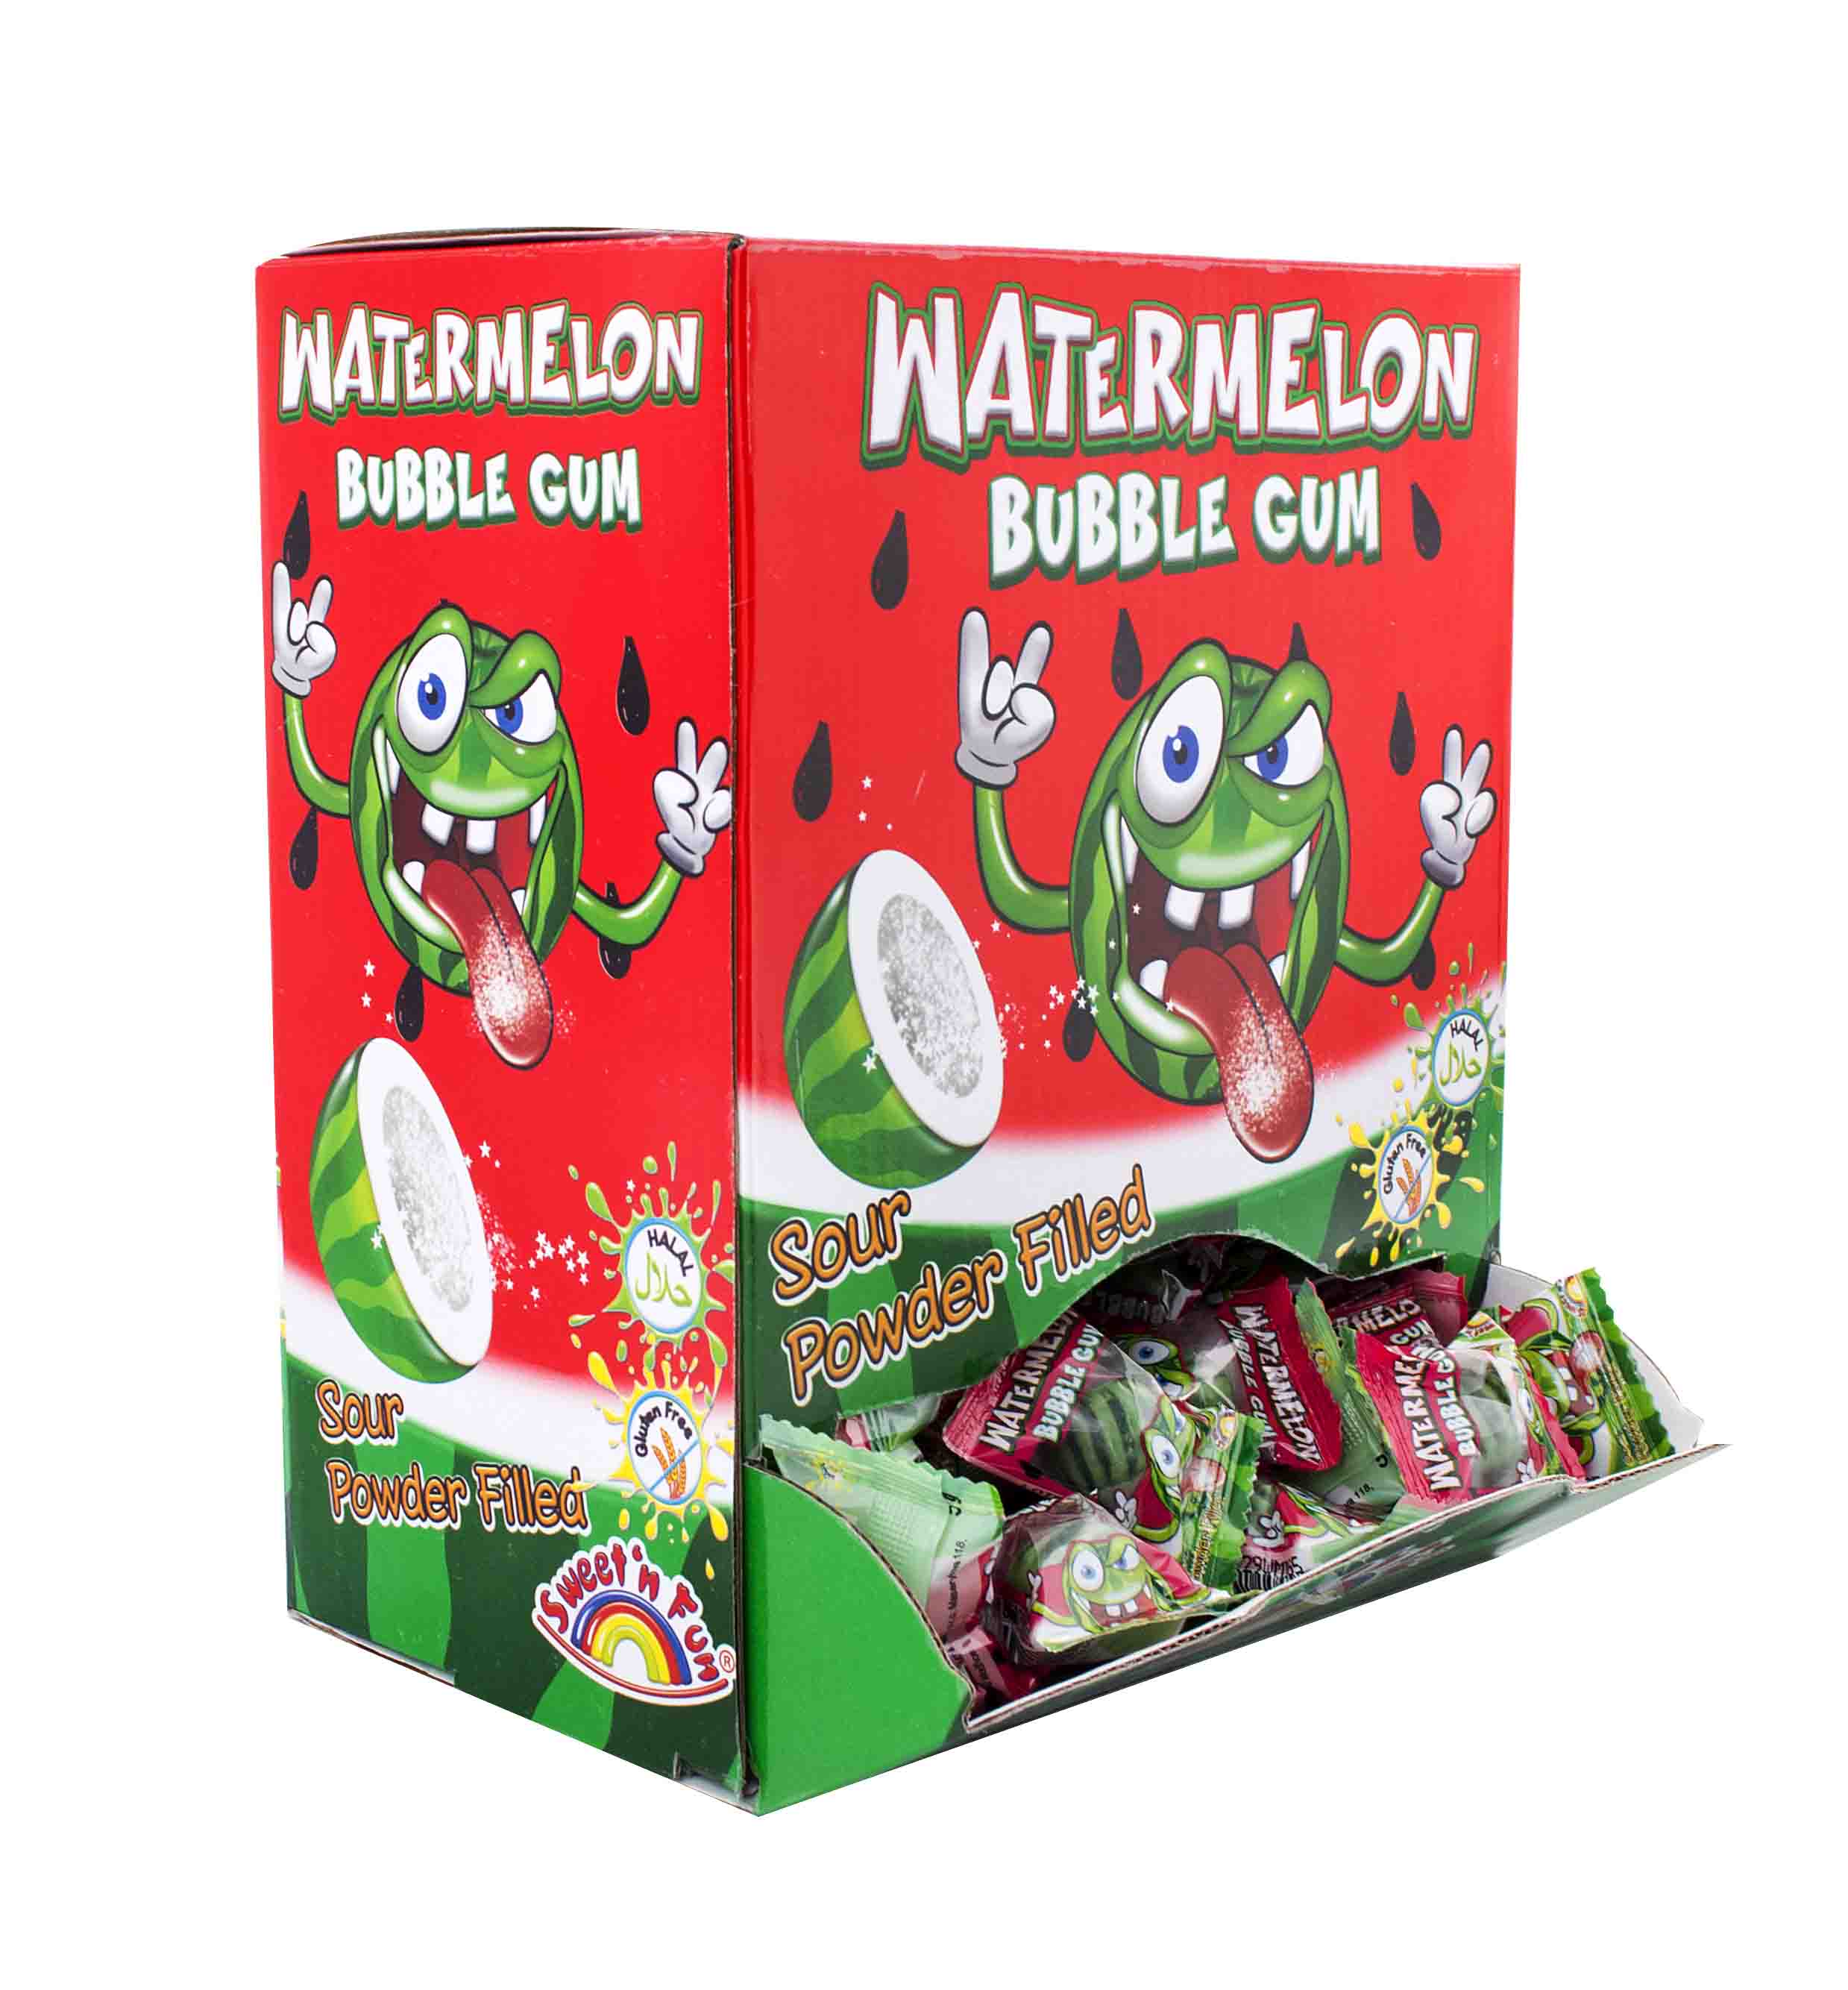 Watermelon žuvačka 5g x 200 ks